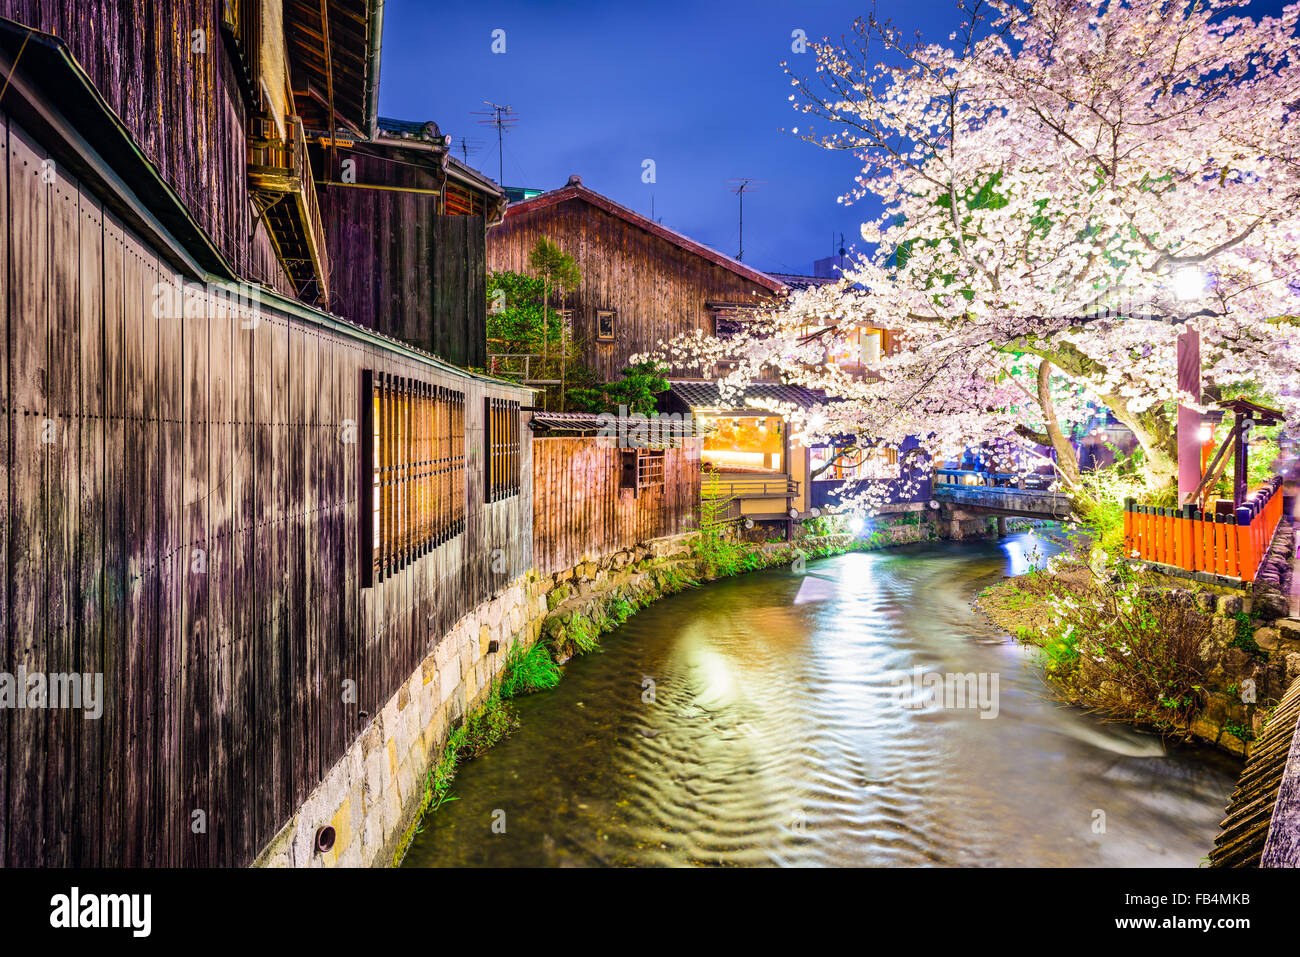 Kyoto, Japan am Fluss Shirakawa im Stadtteil Gion während der Frühjahrssaison Cherry blossom. Stockfoto